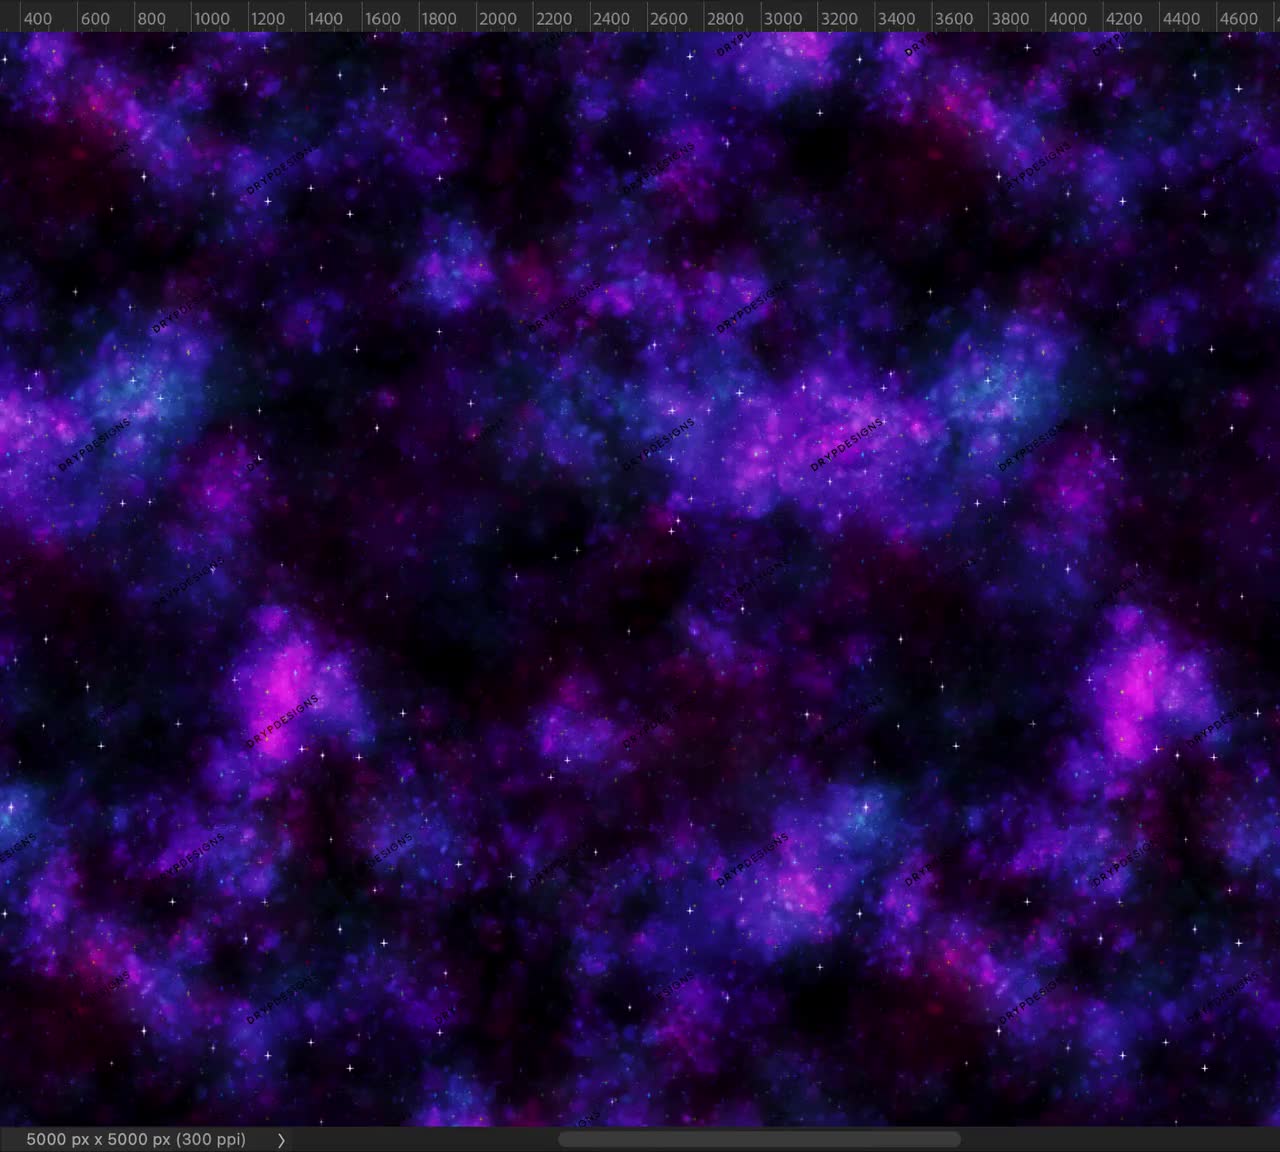 galaxy print - violet, blue, pink Fabric